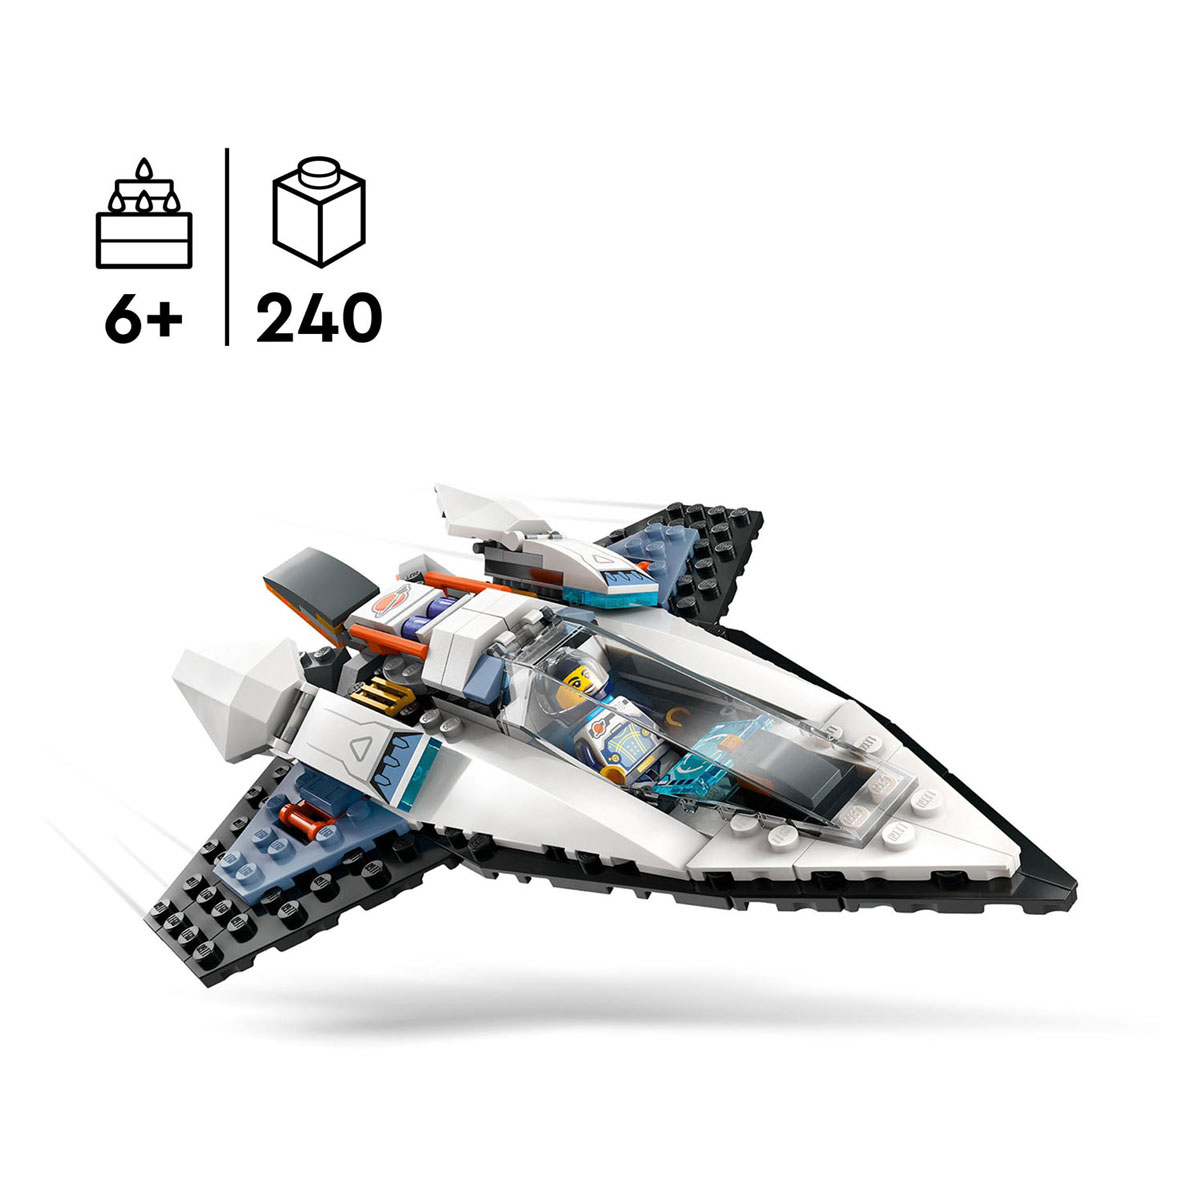 LEGO City 60430 Vaisseau spatial interstellaire